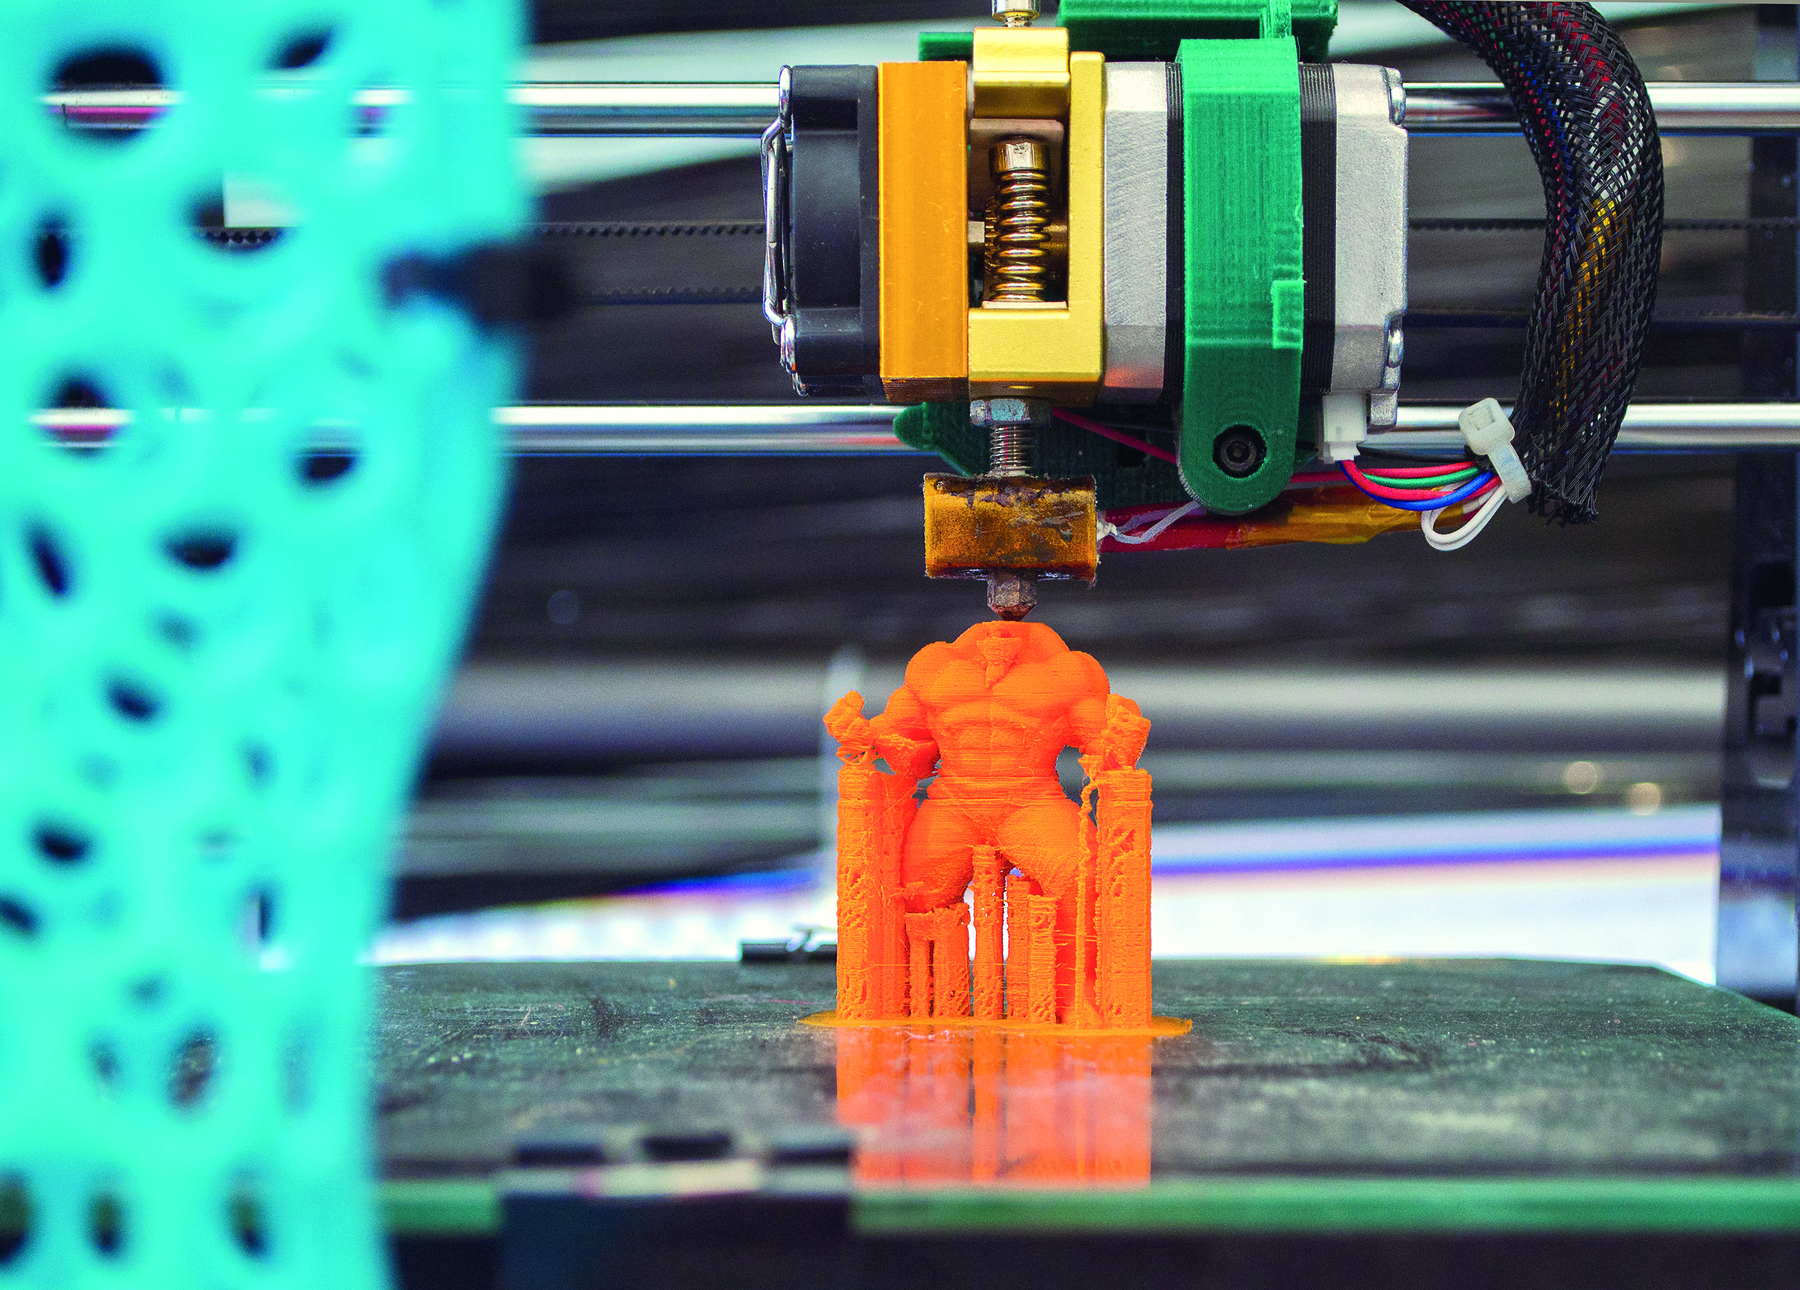 Fotografia: Impressora 3D está imprimindo um boneco laranja, estilo super-herói.